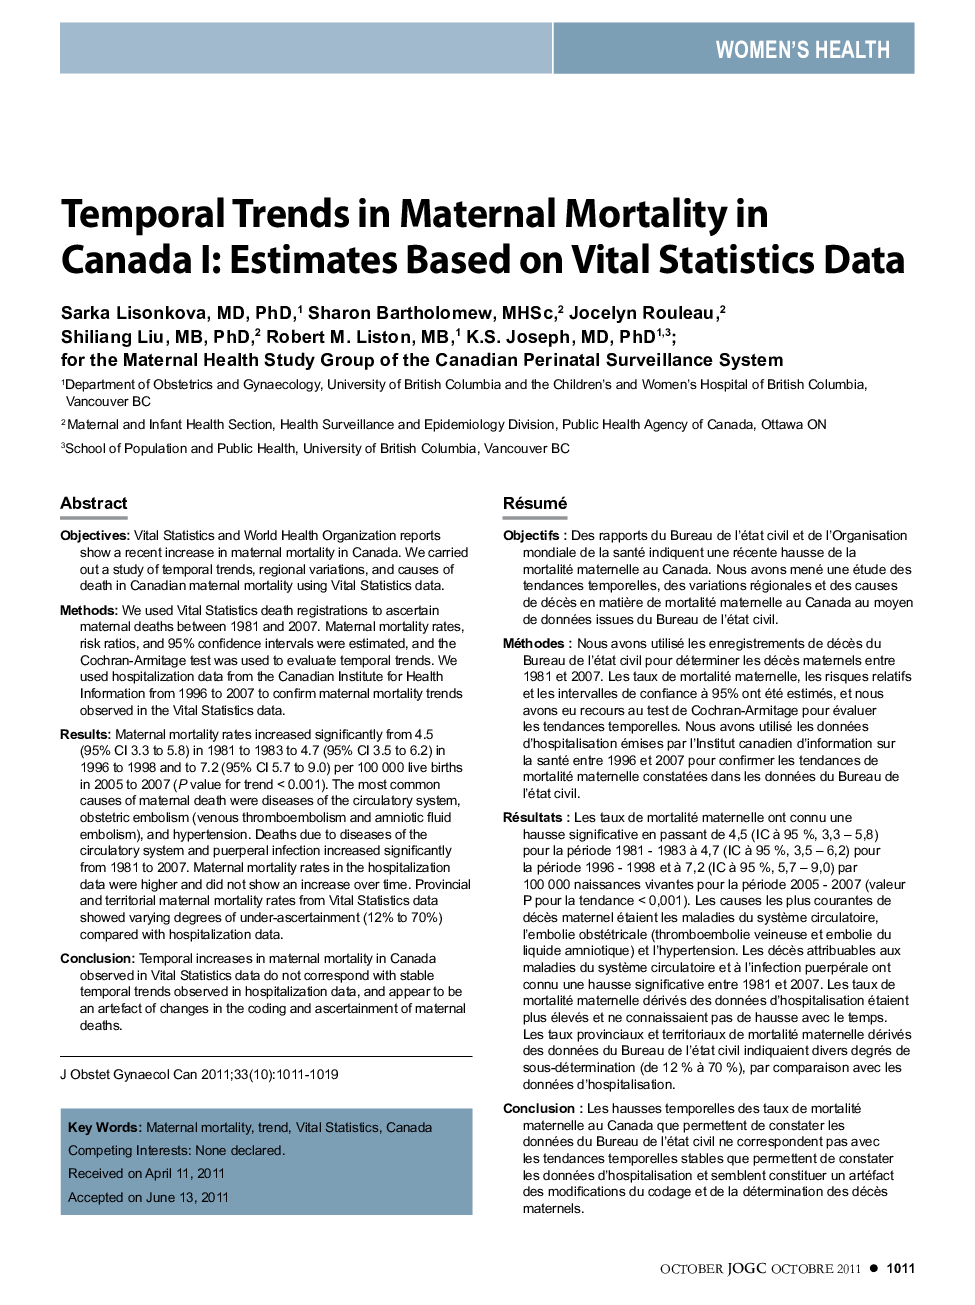 Temporal Trends in Maternal Mortality in Canada I: Estimates Based on Vital Statistics Data